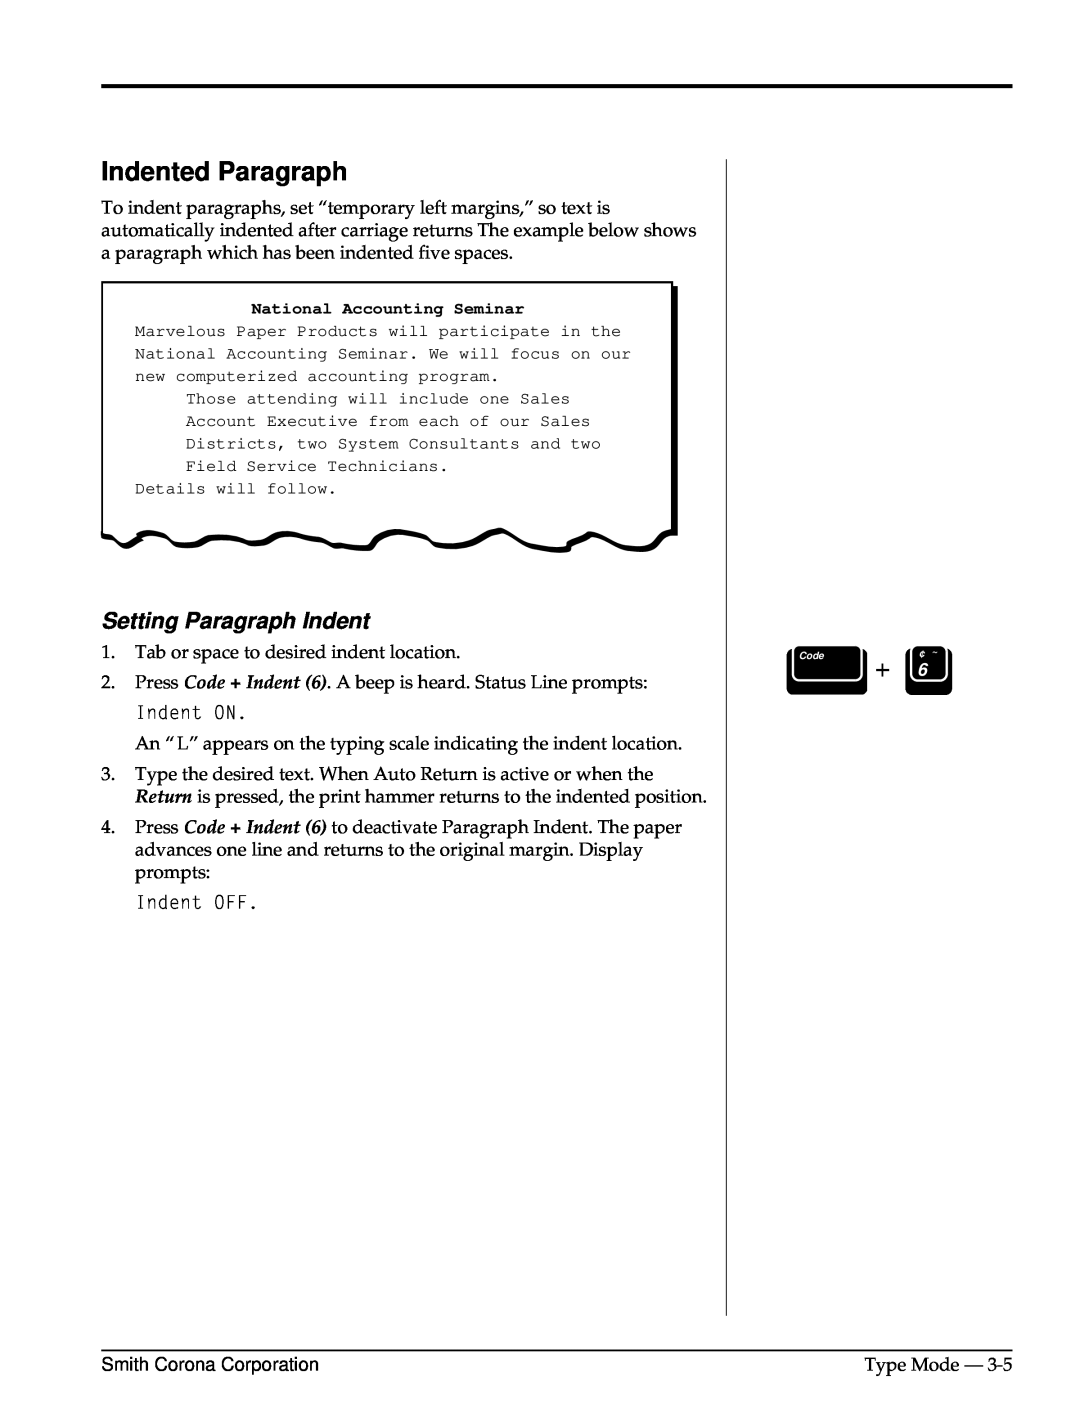 Smith Corona Computer Keyboard manual Indented Paragraph, Setting Paragraph Indent 